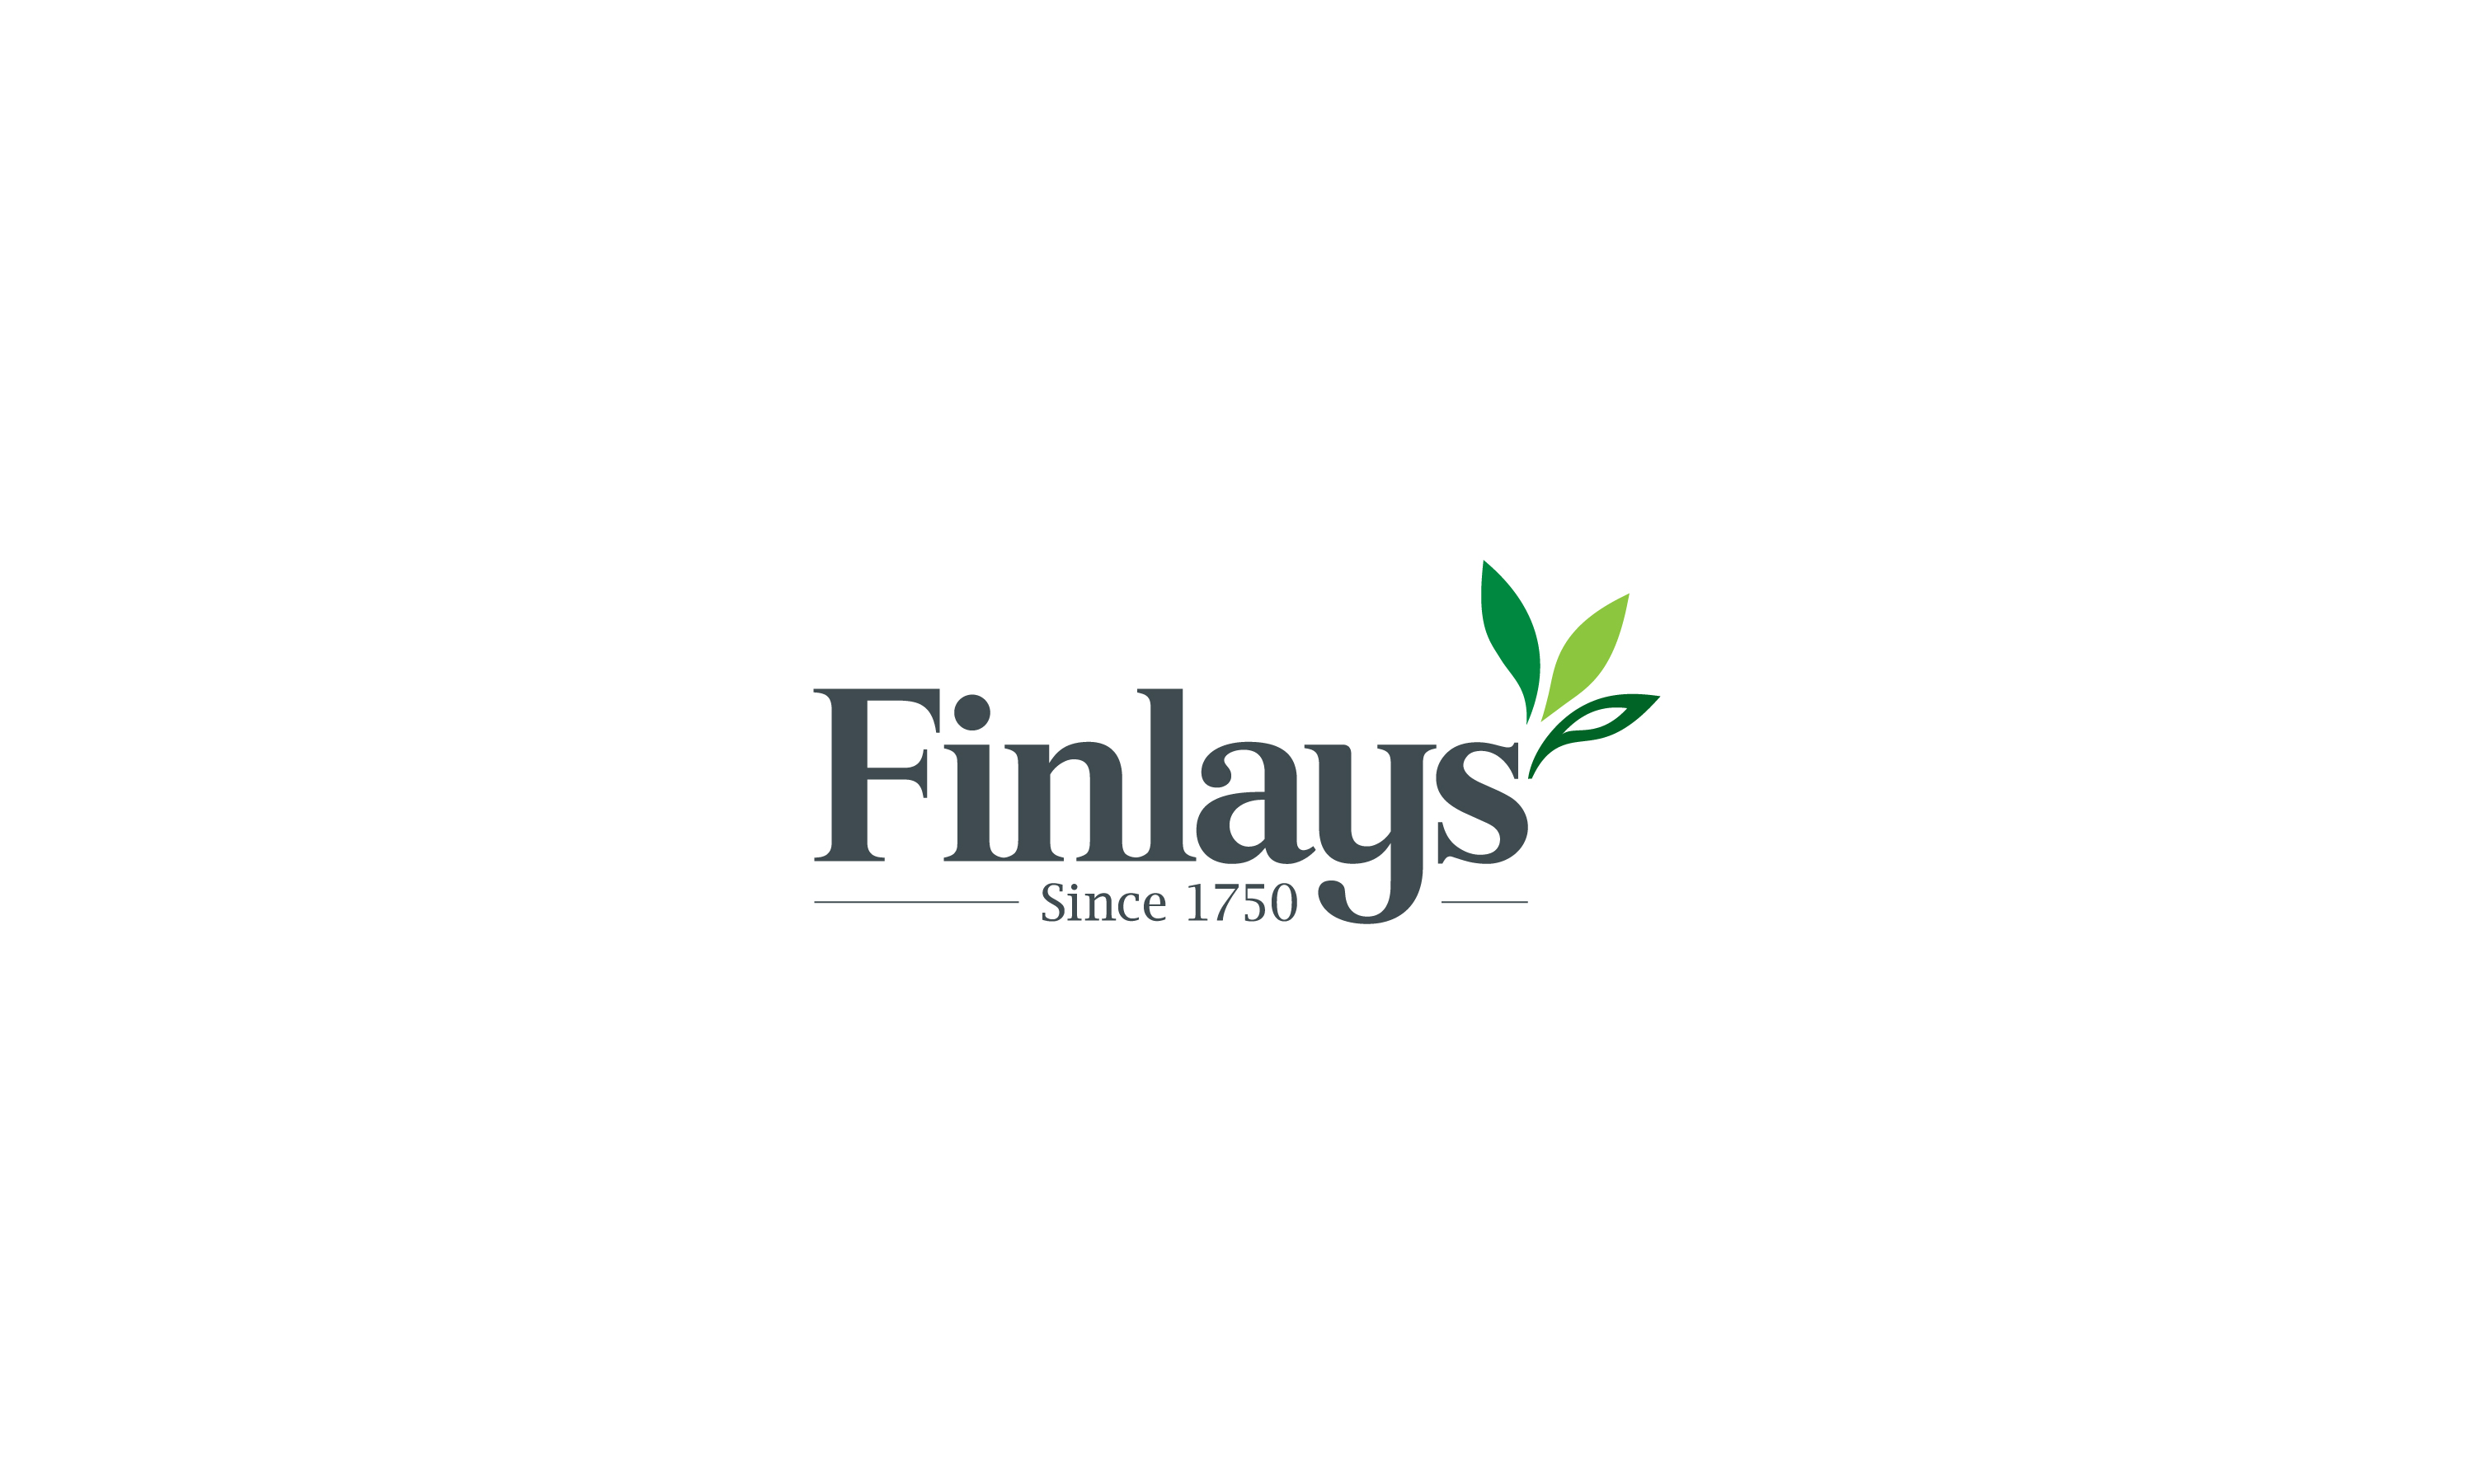 Finlays